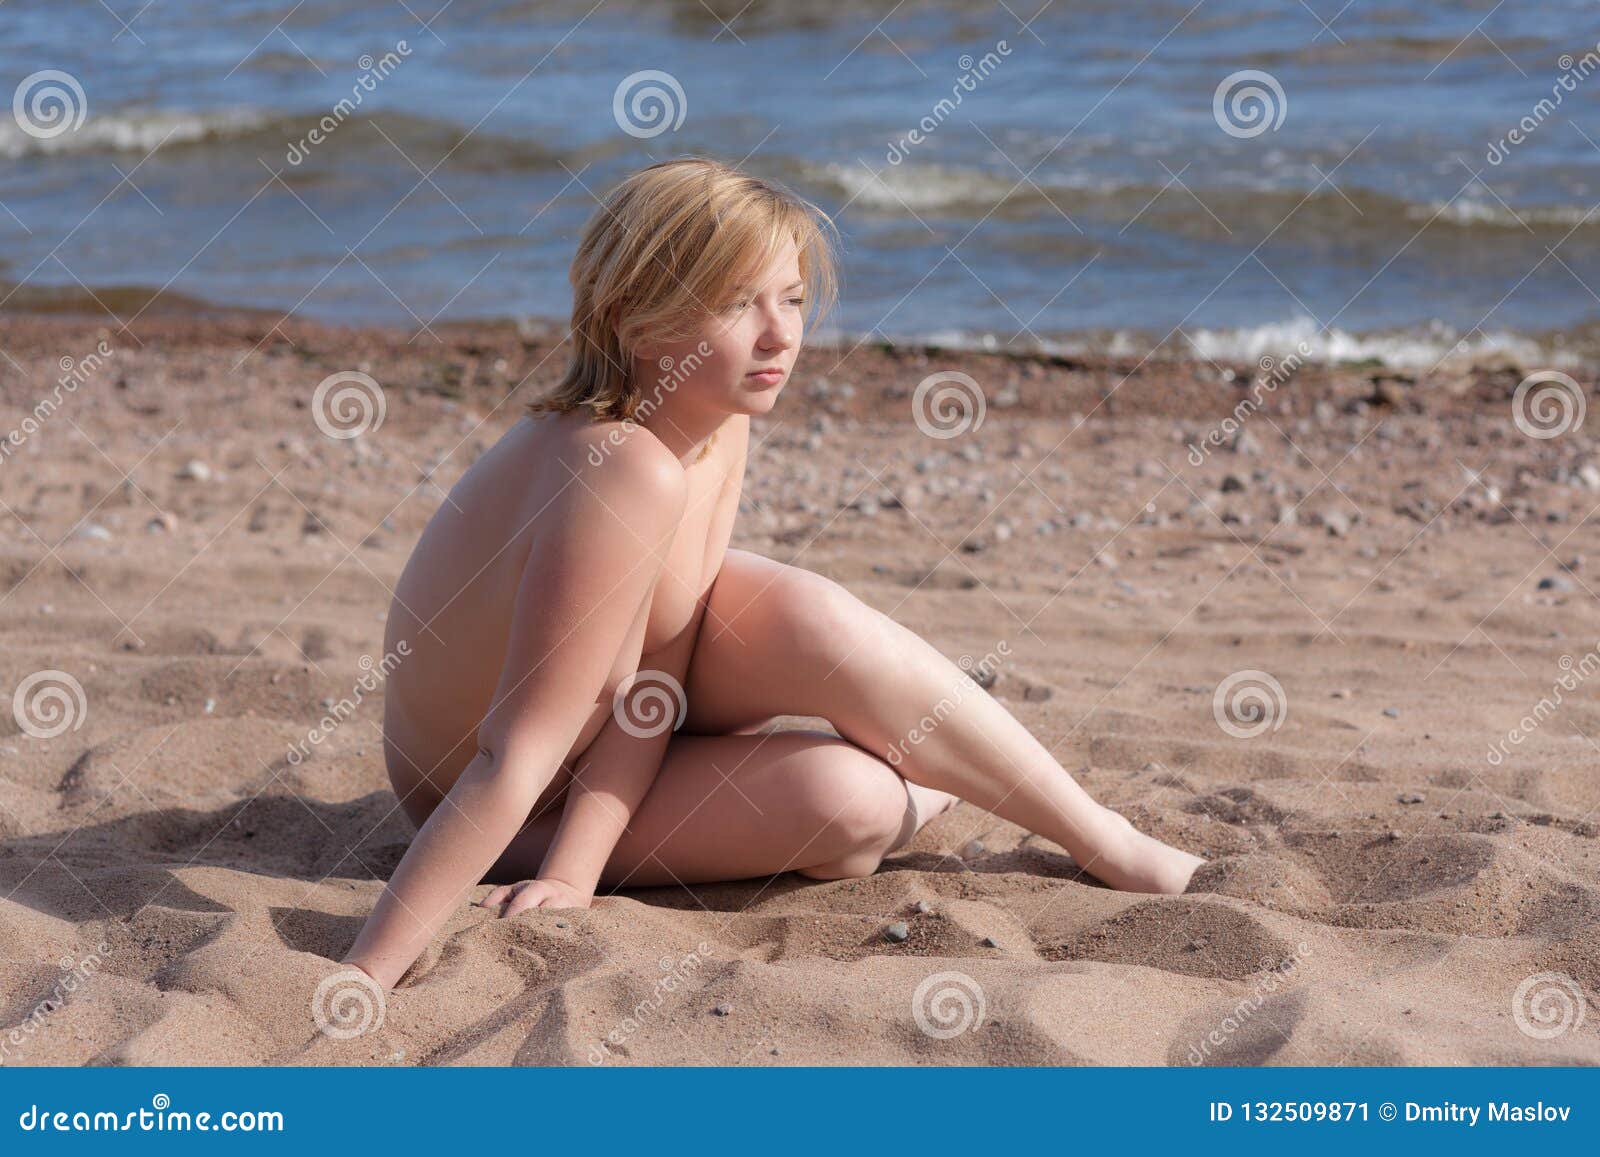 Ladies naked on beach